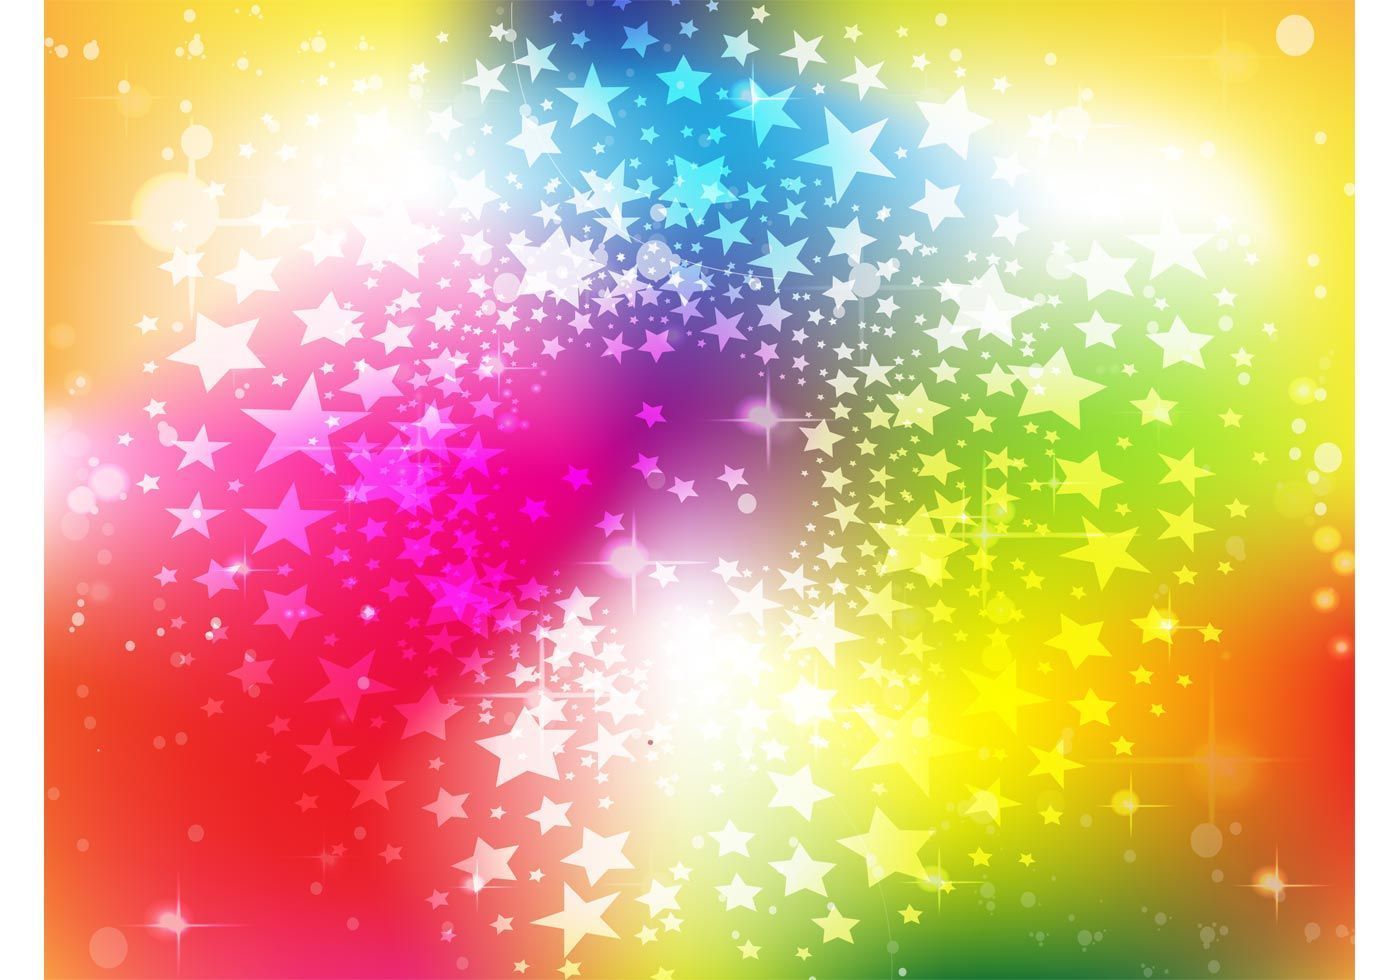 Stars Background Free Vector Art - (10075 Free Downloads)